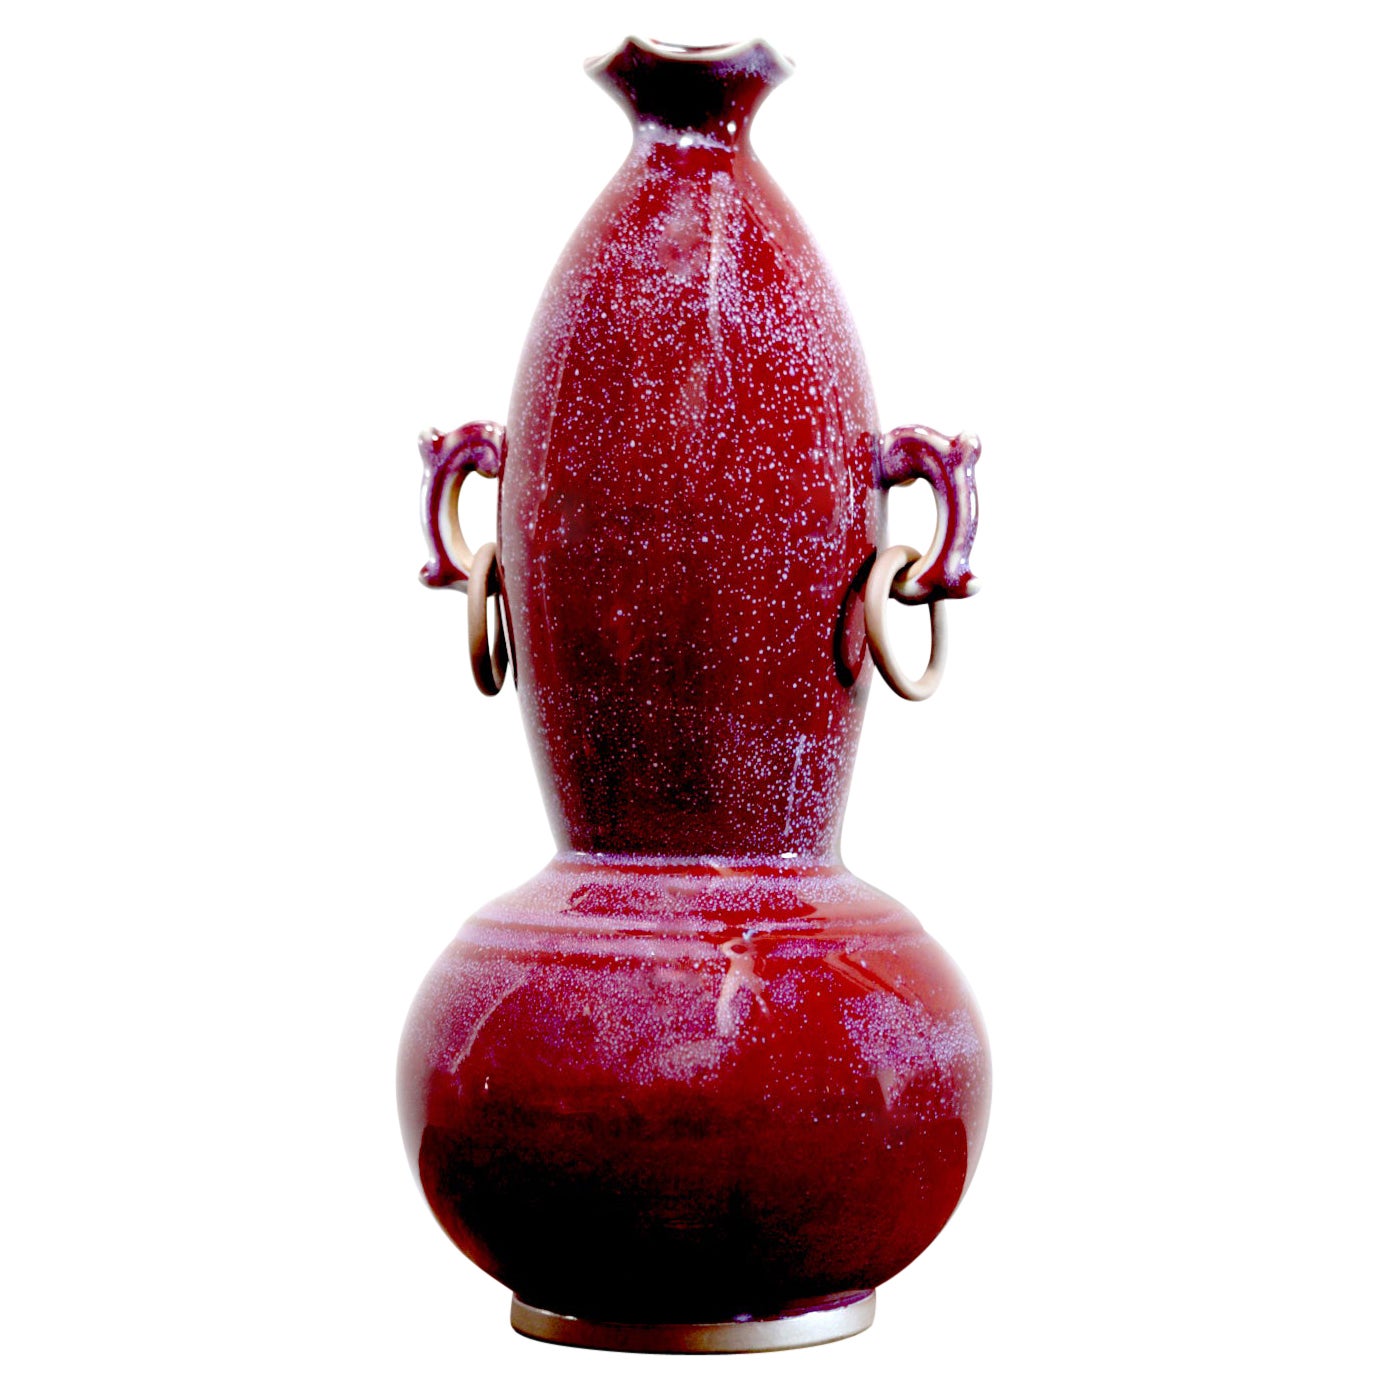 Seltene Sang de Boeuf-Vase mit Ochsenblut-Kürbis und Ohrringen, Kupferringe, 19. Jahrhundert